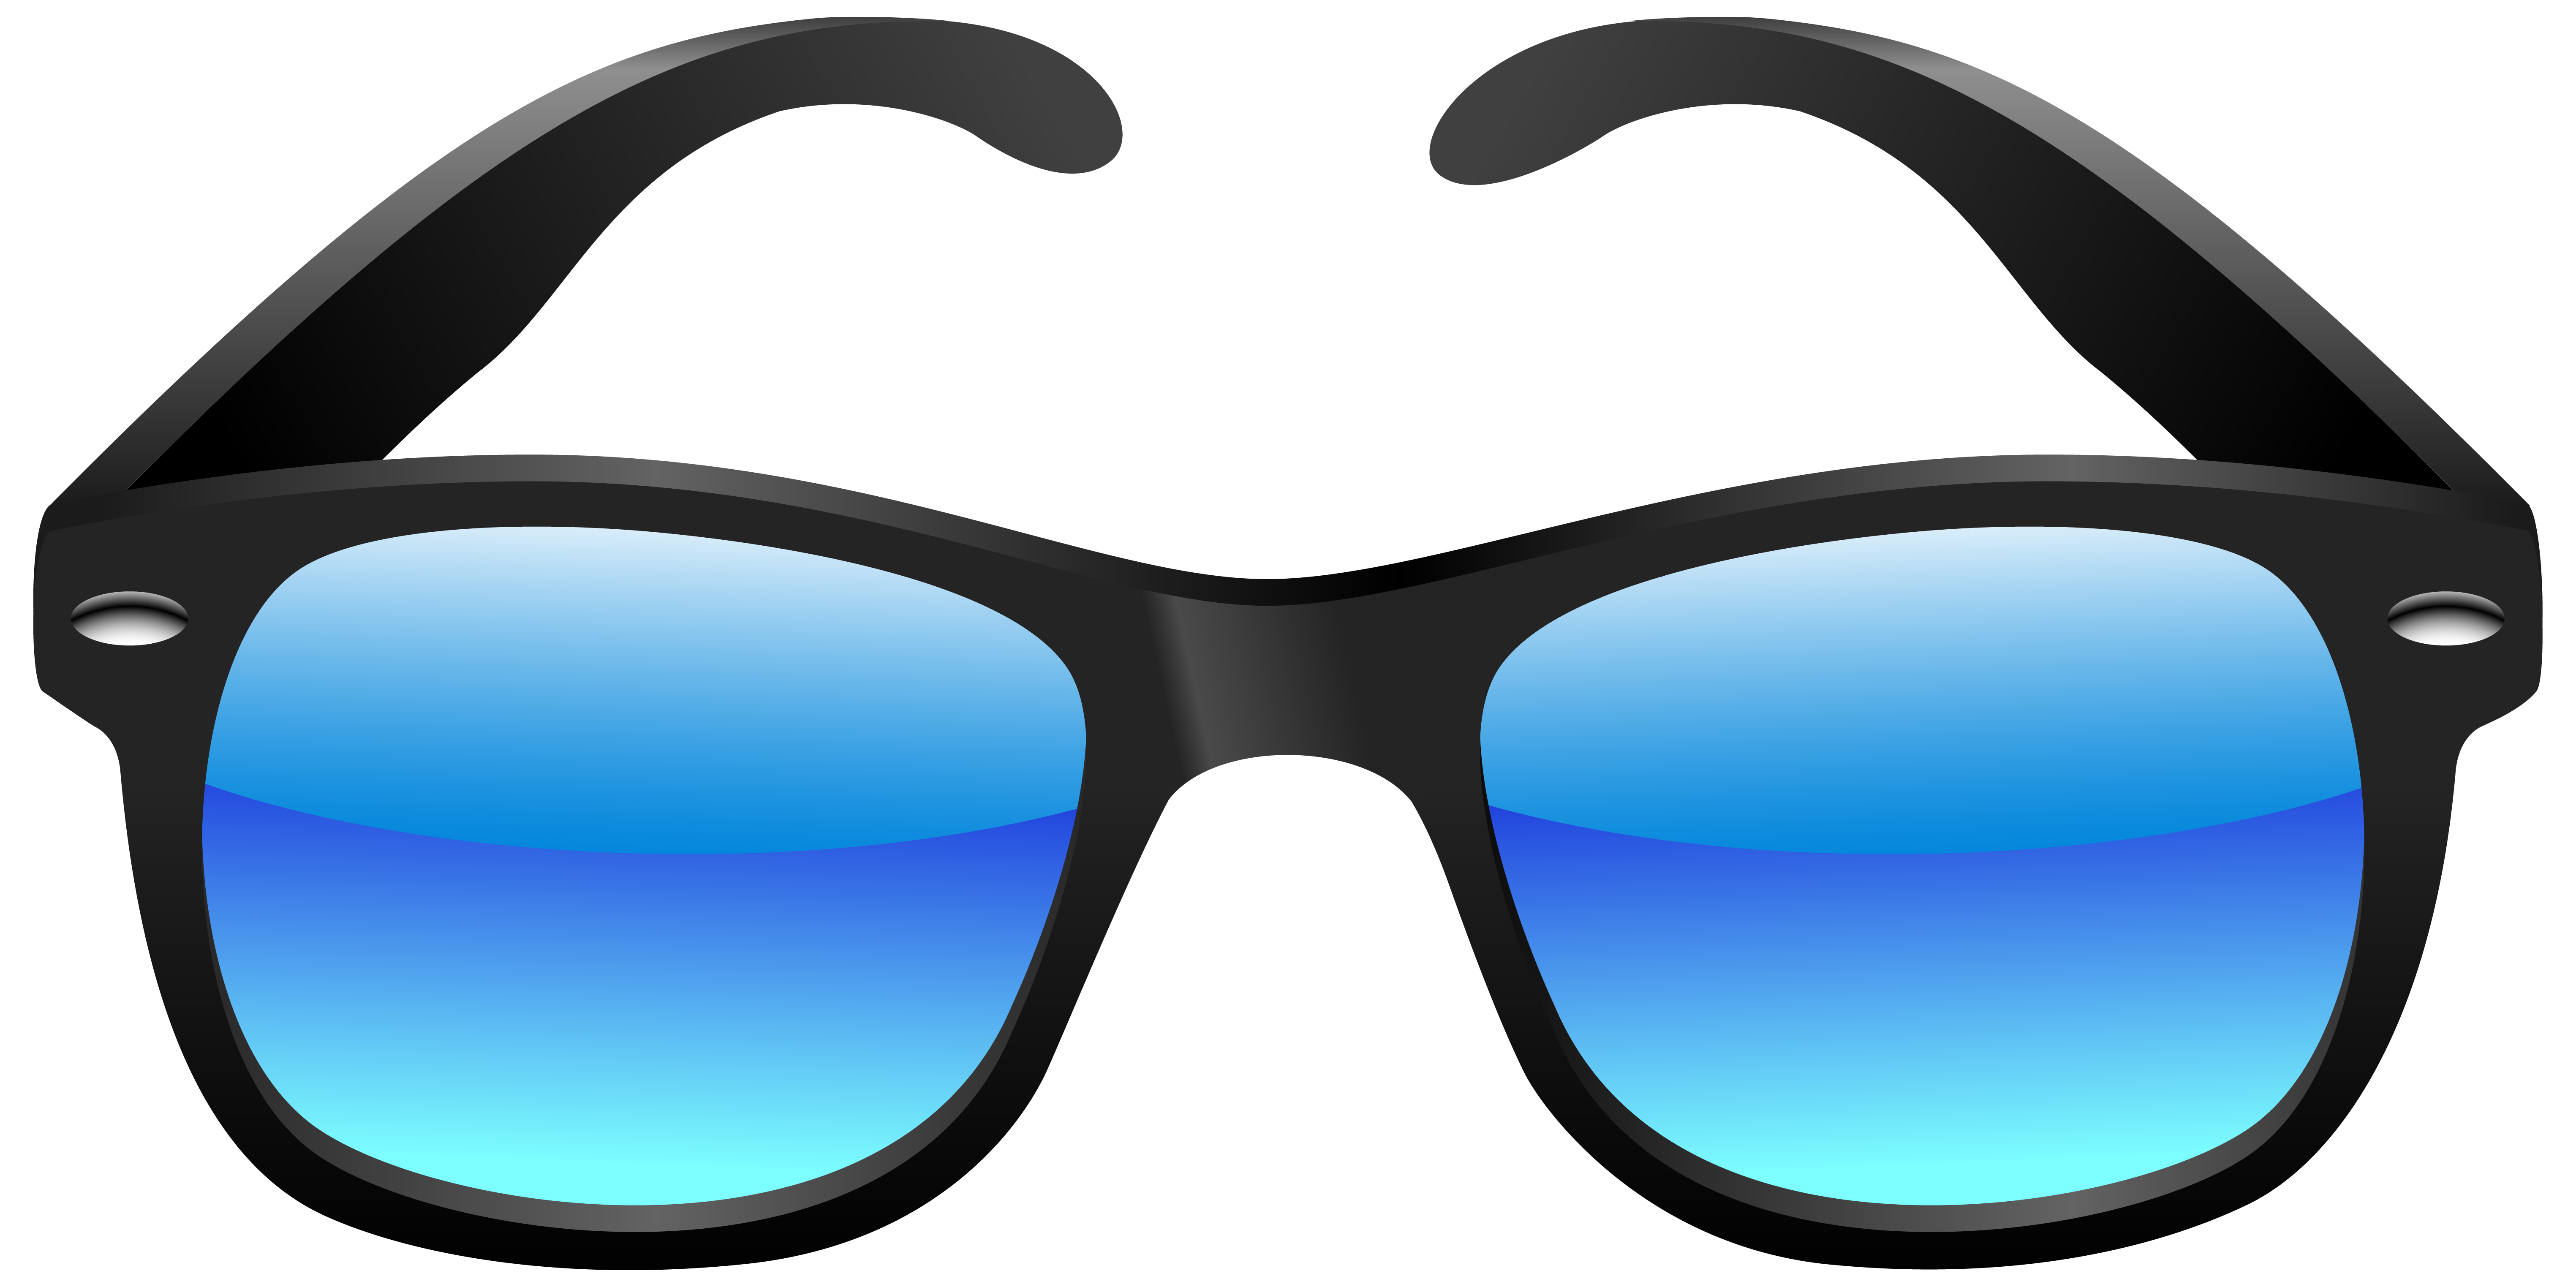 Clip art of sunglasses clipar - Sunglasses Clipart